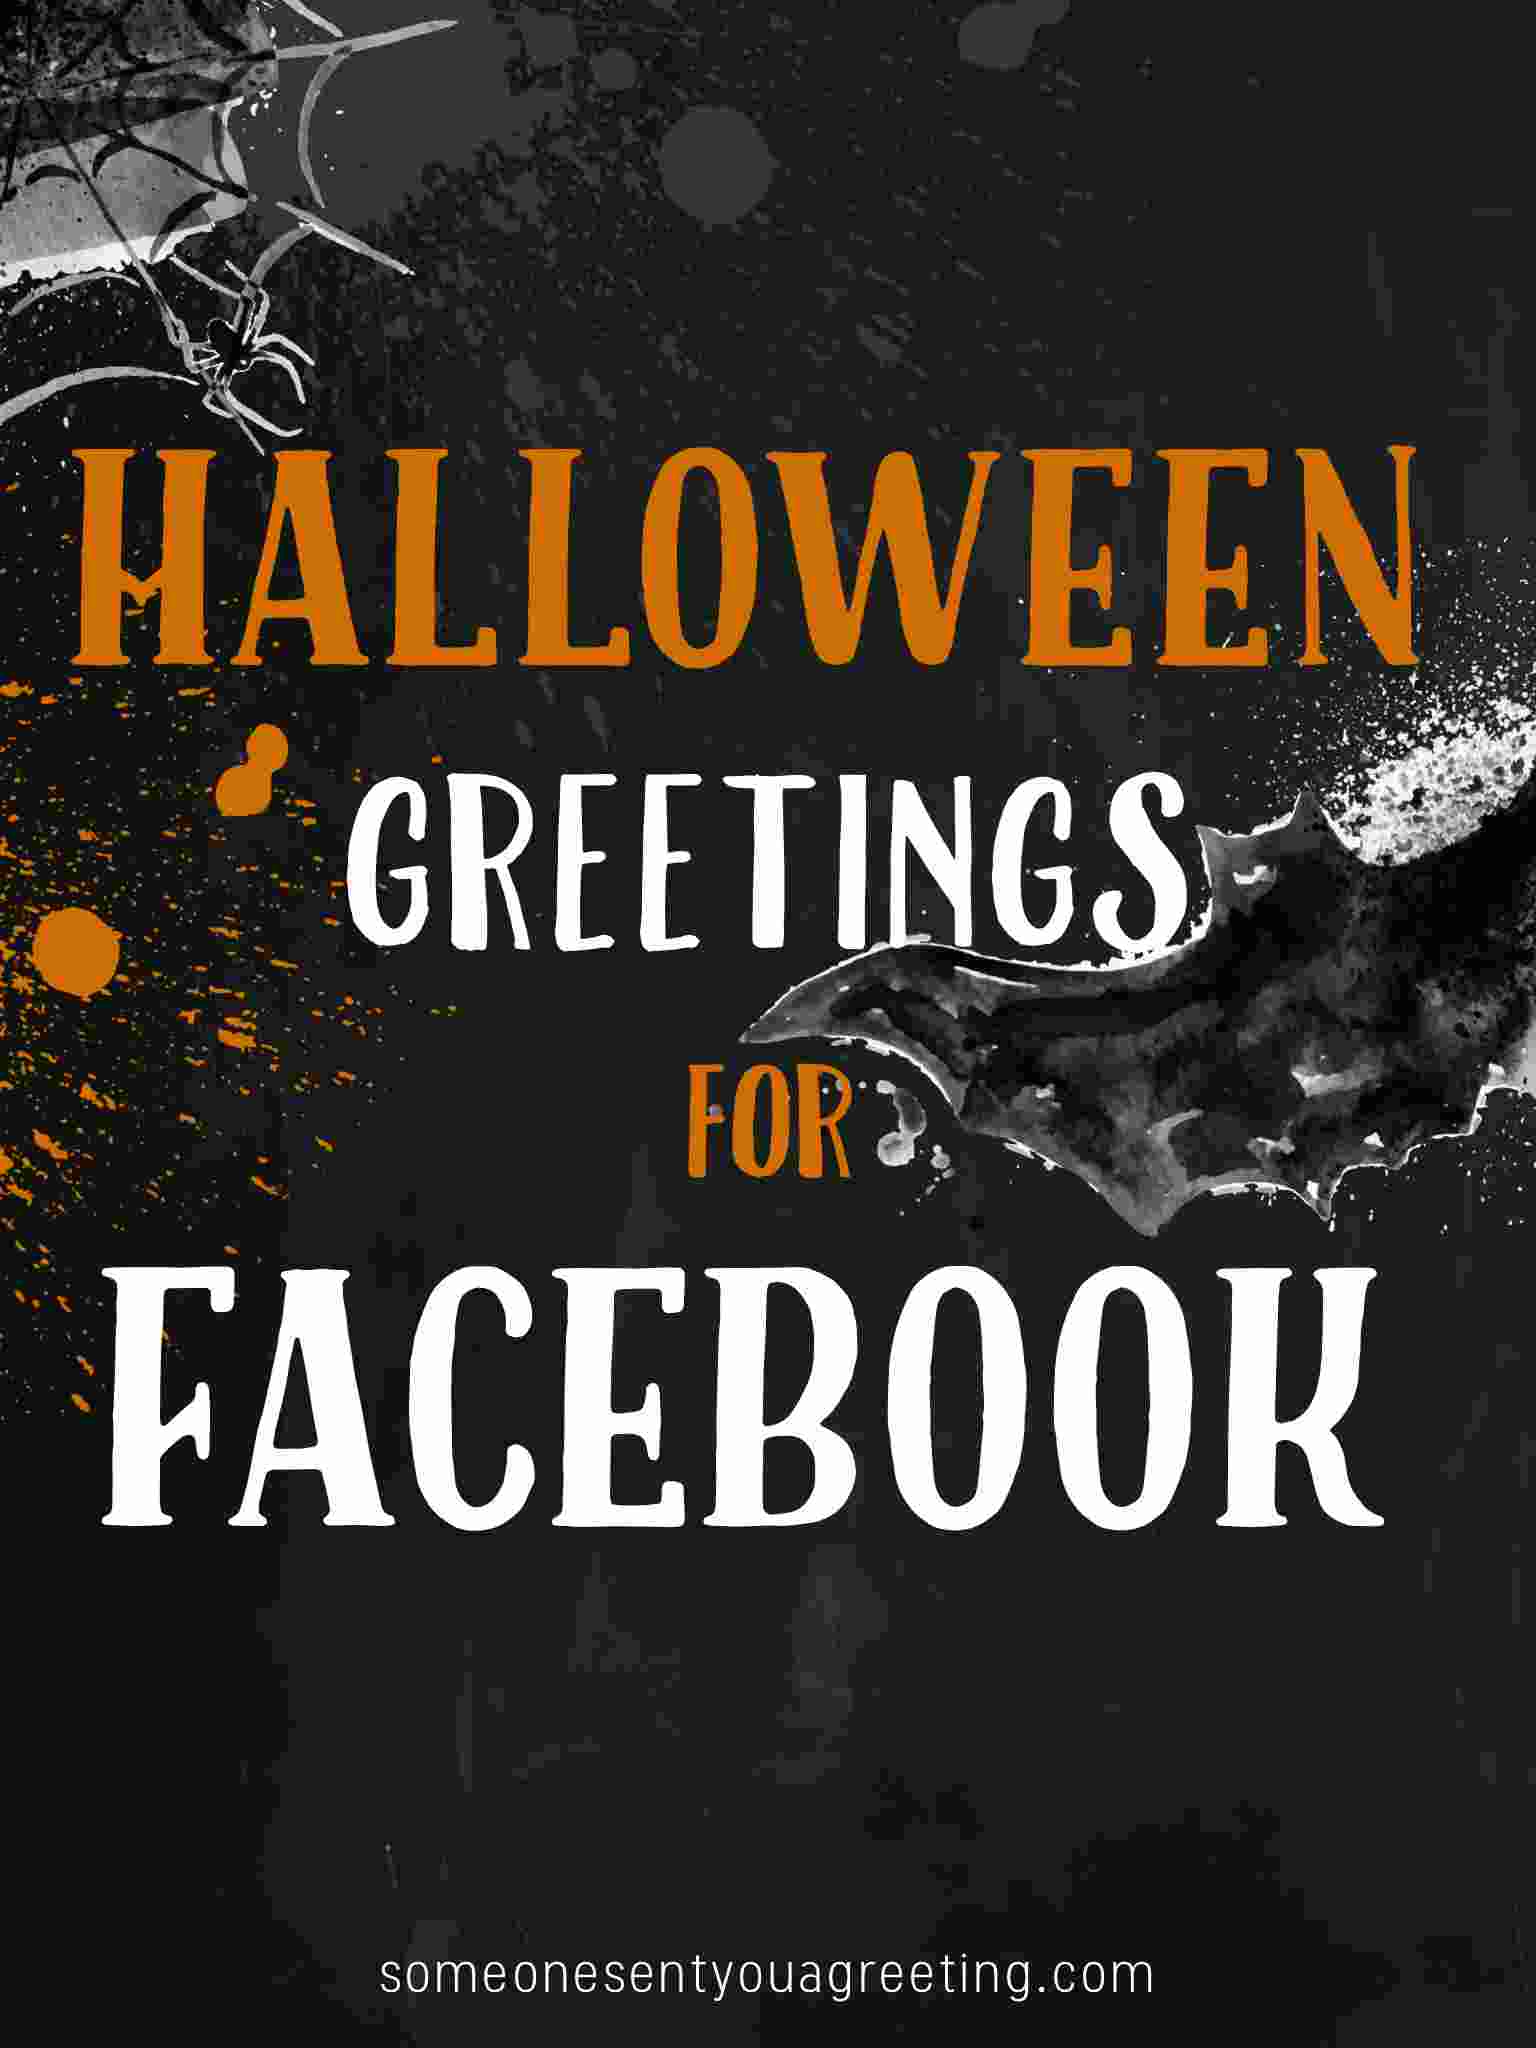 Halloween greetings for Facebook